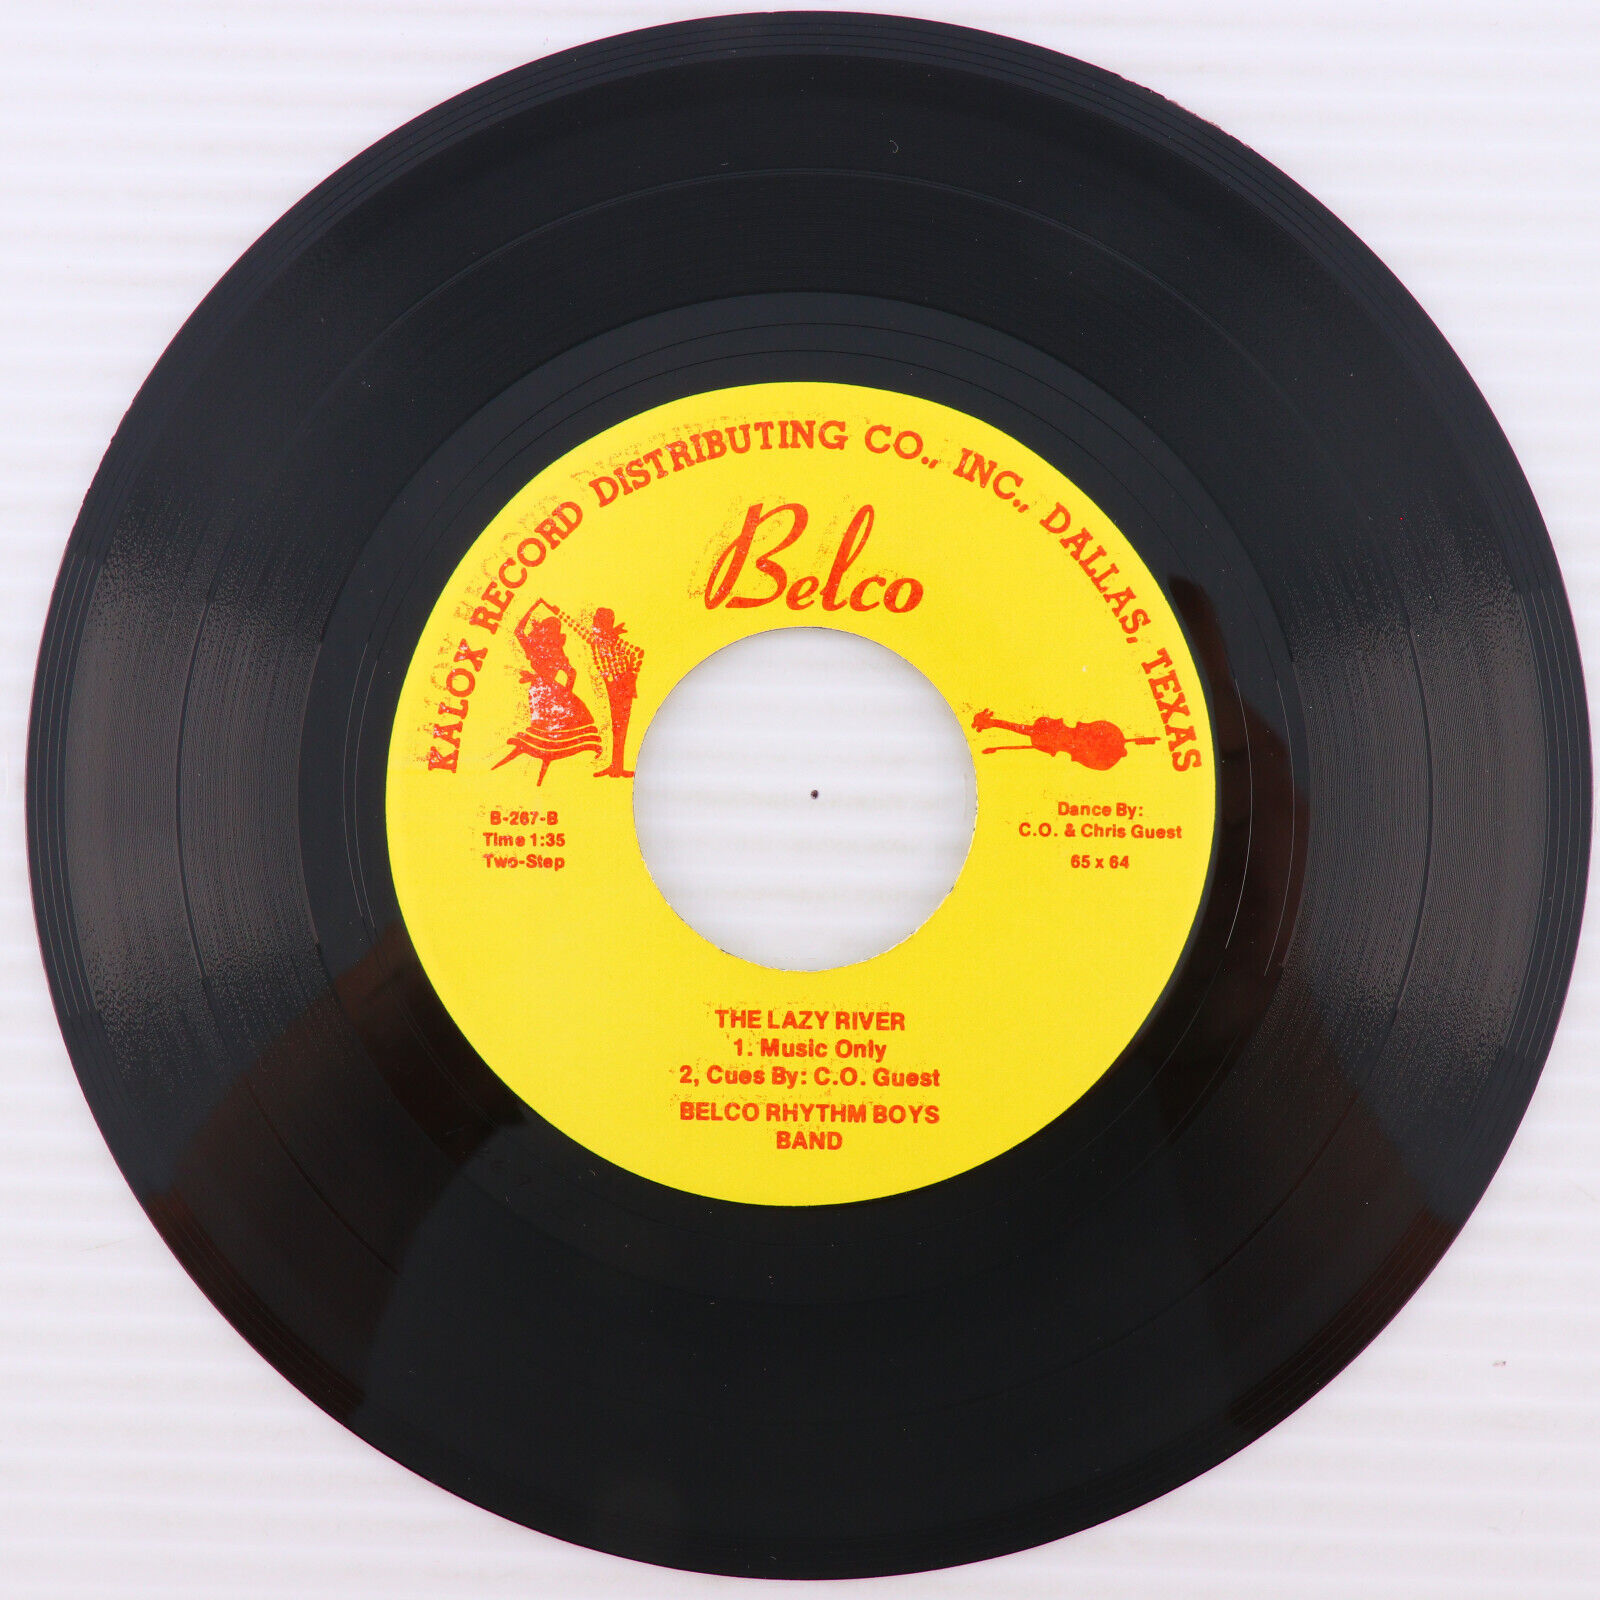 Belco Rhythm Boys Band - Old Fashioned/Lazy River - 45 rpm Record B-267